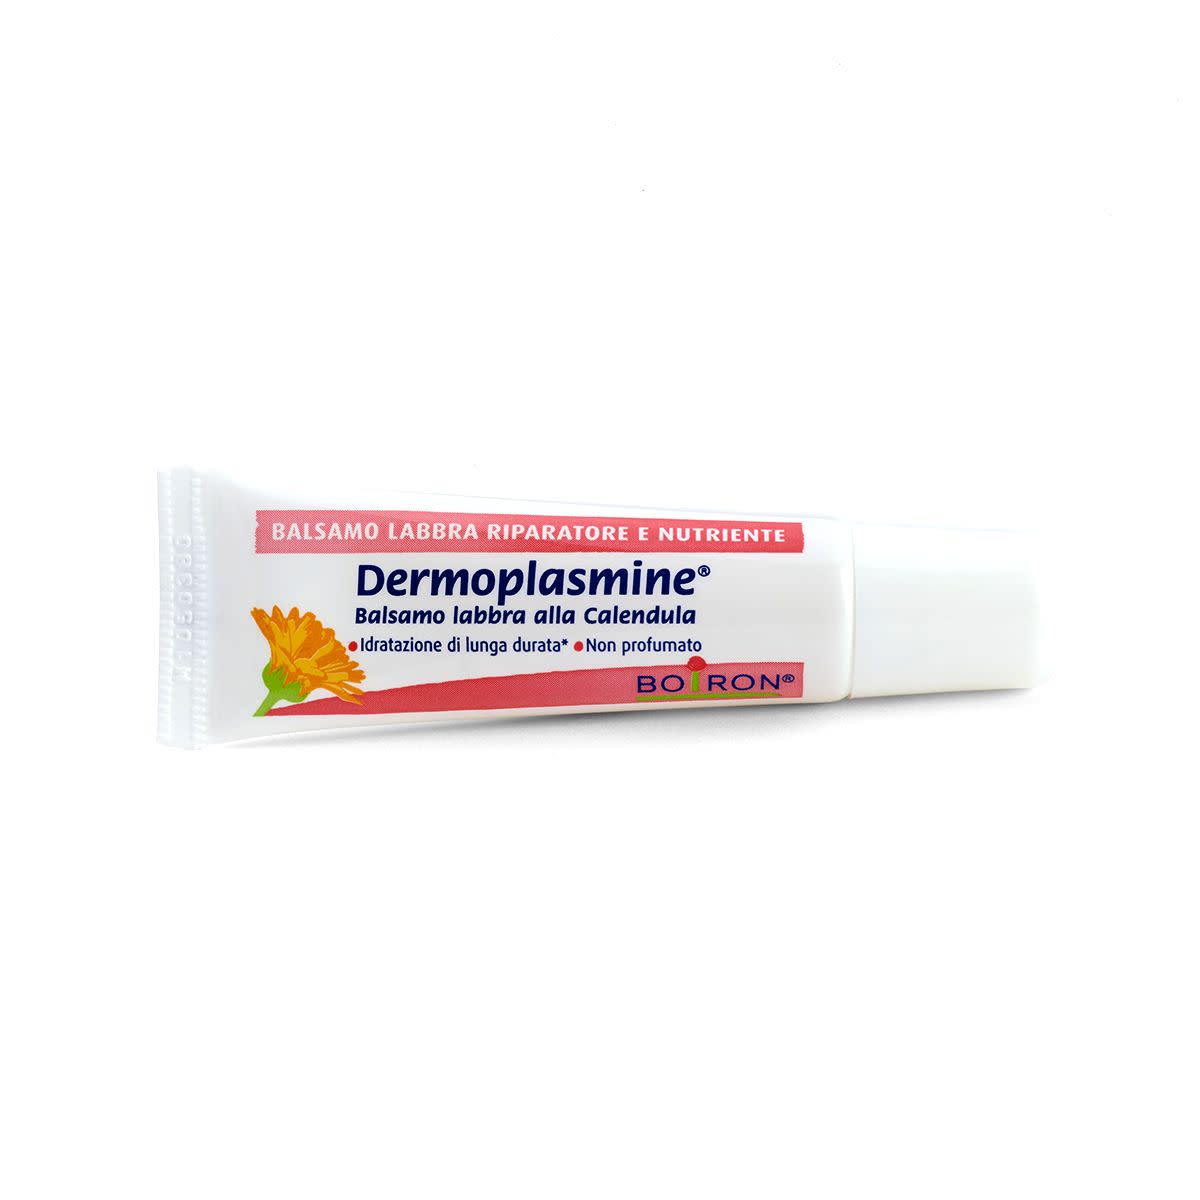 981554532 - Boiron Dermoplasmine Balsamo Labbra riparatore e nutriente 10g - 4709031_1.jpg